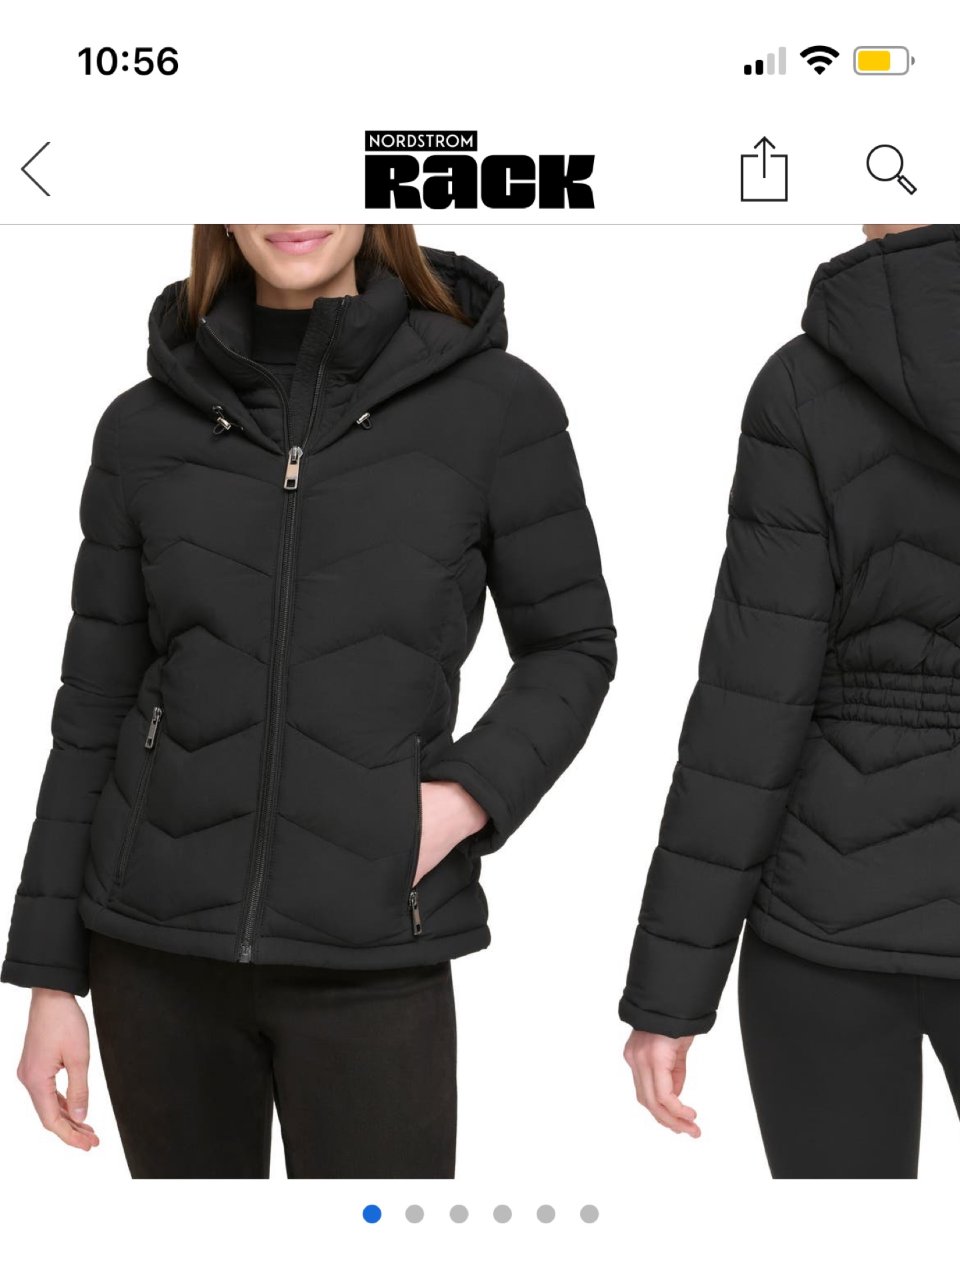 黑色jacket 